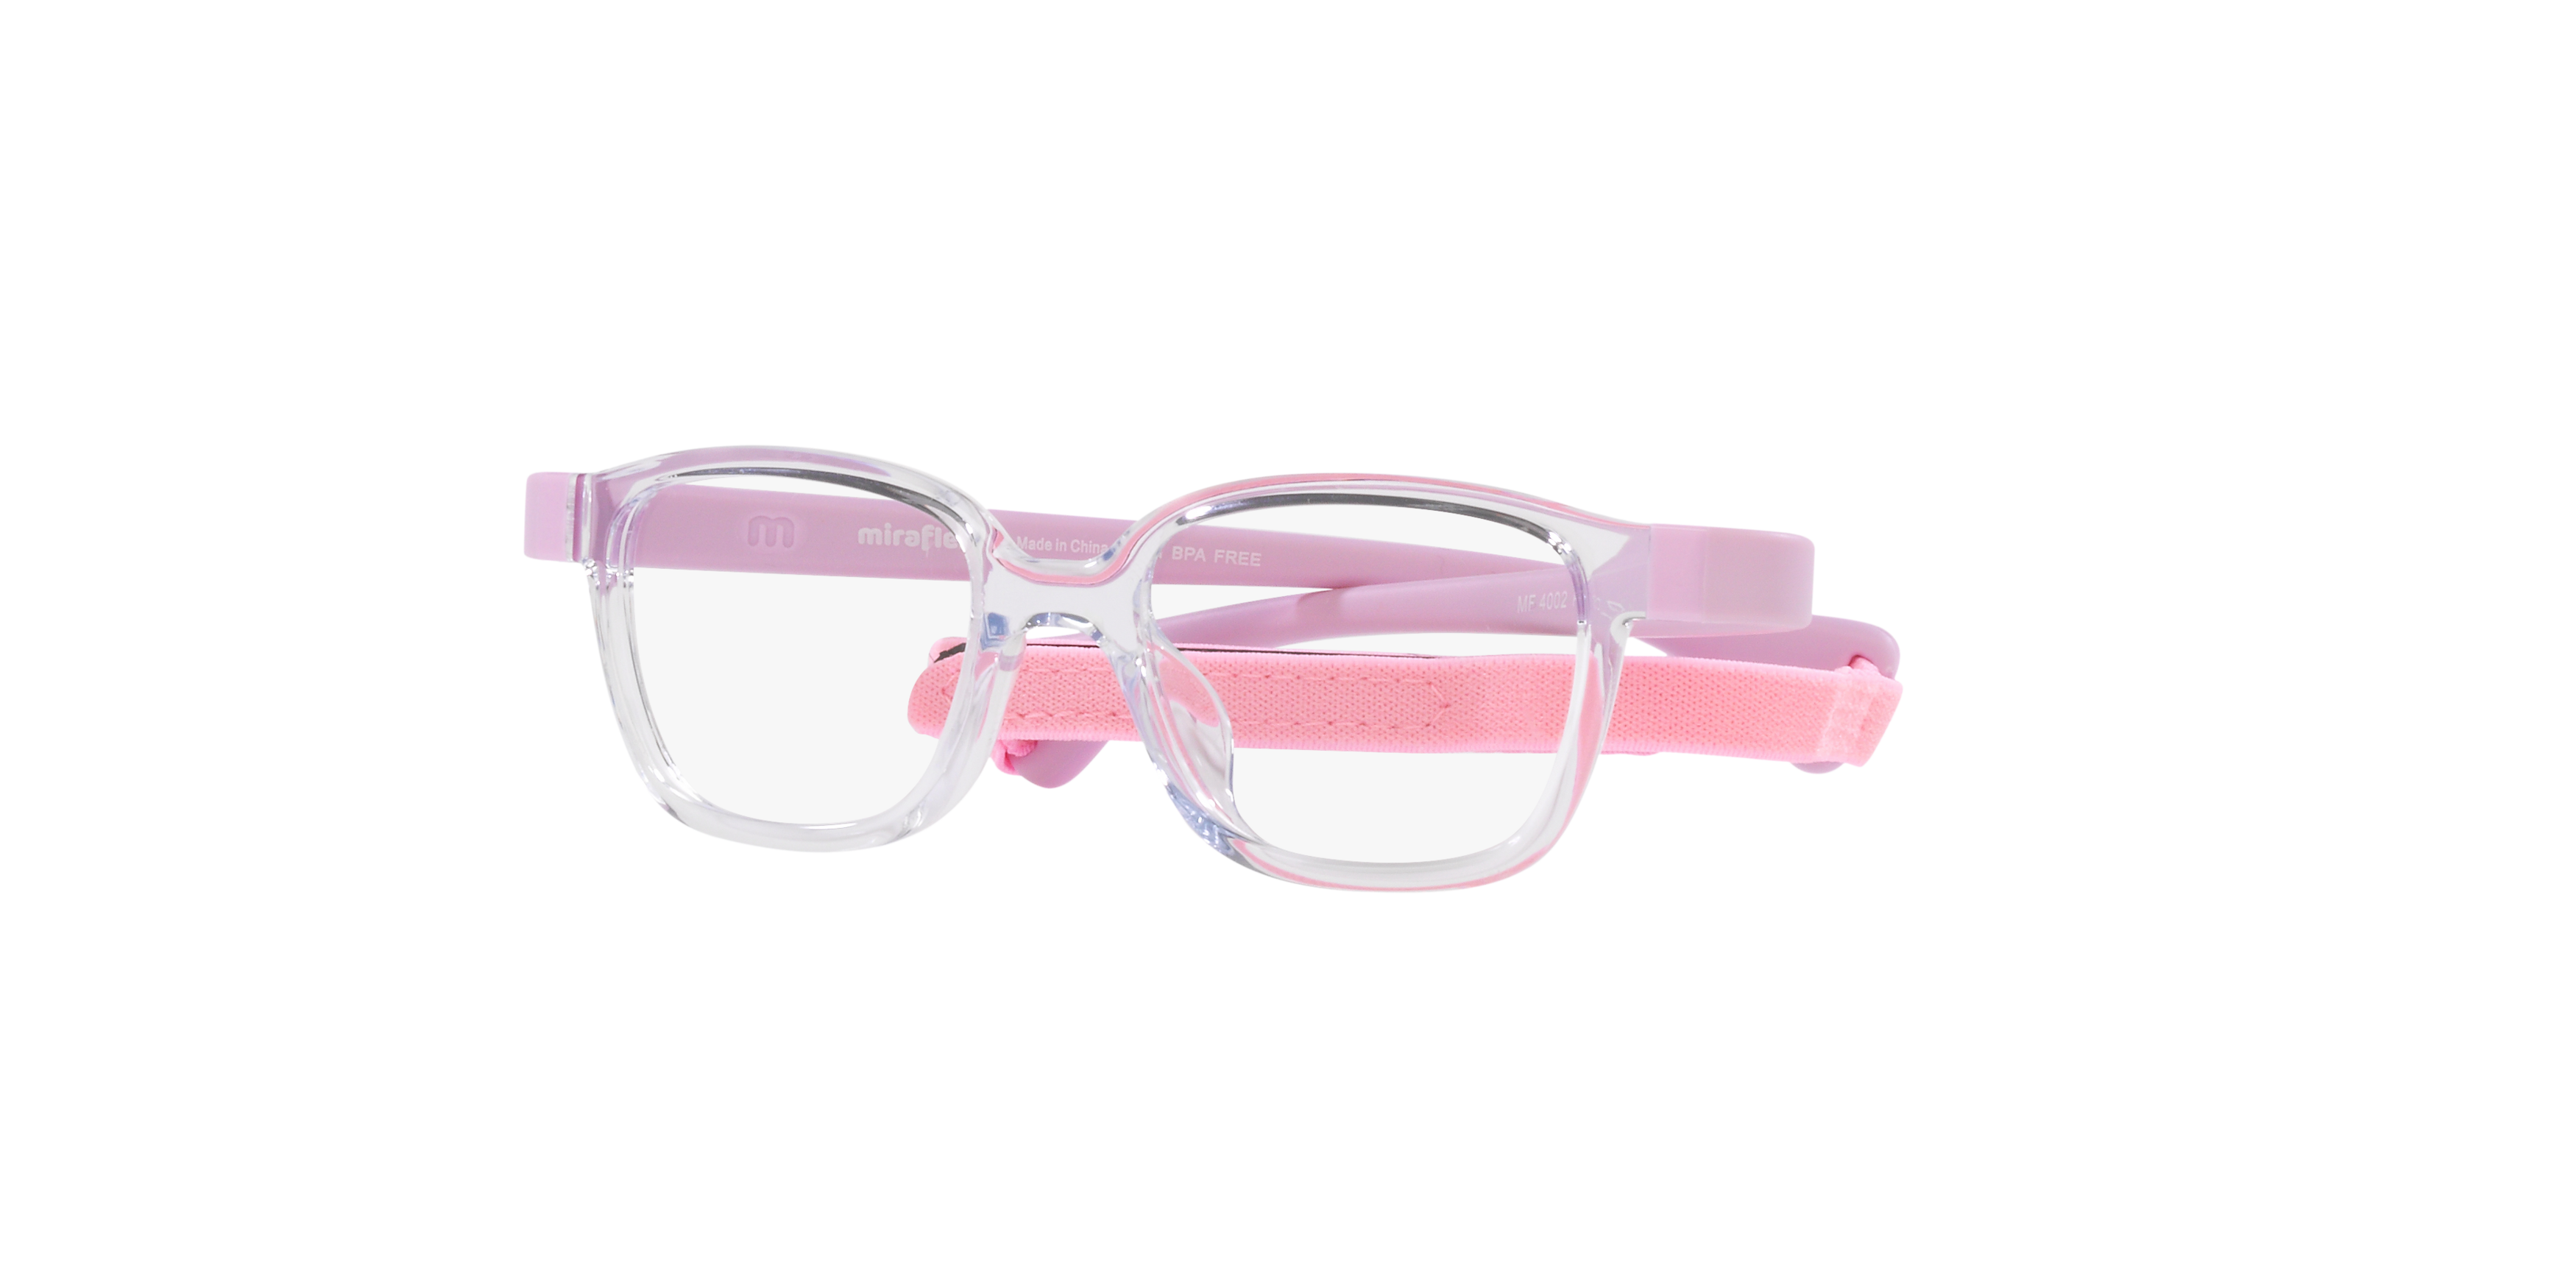 Angle_Left01 Miraflex MF 4002 Children's Glasses Transparent / Transparent, Clear